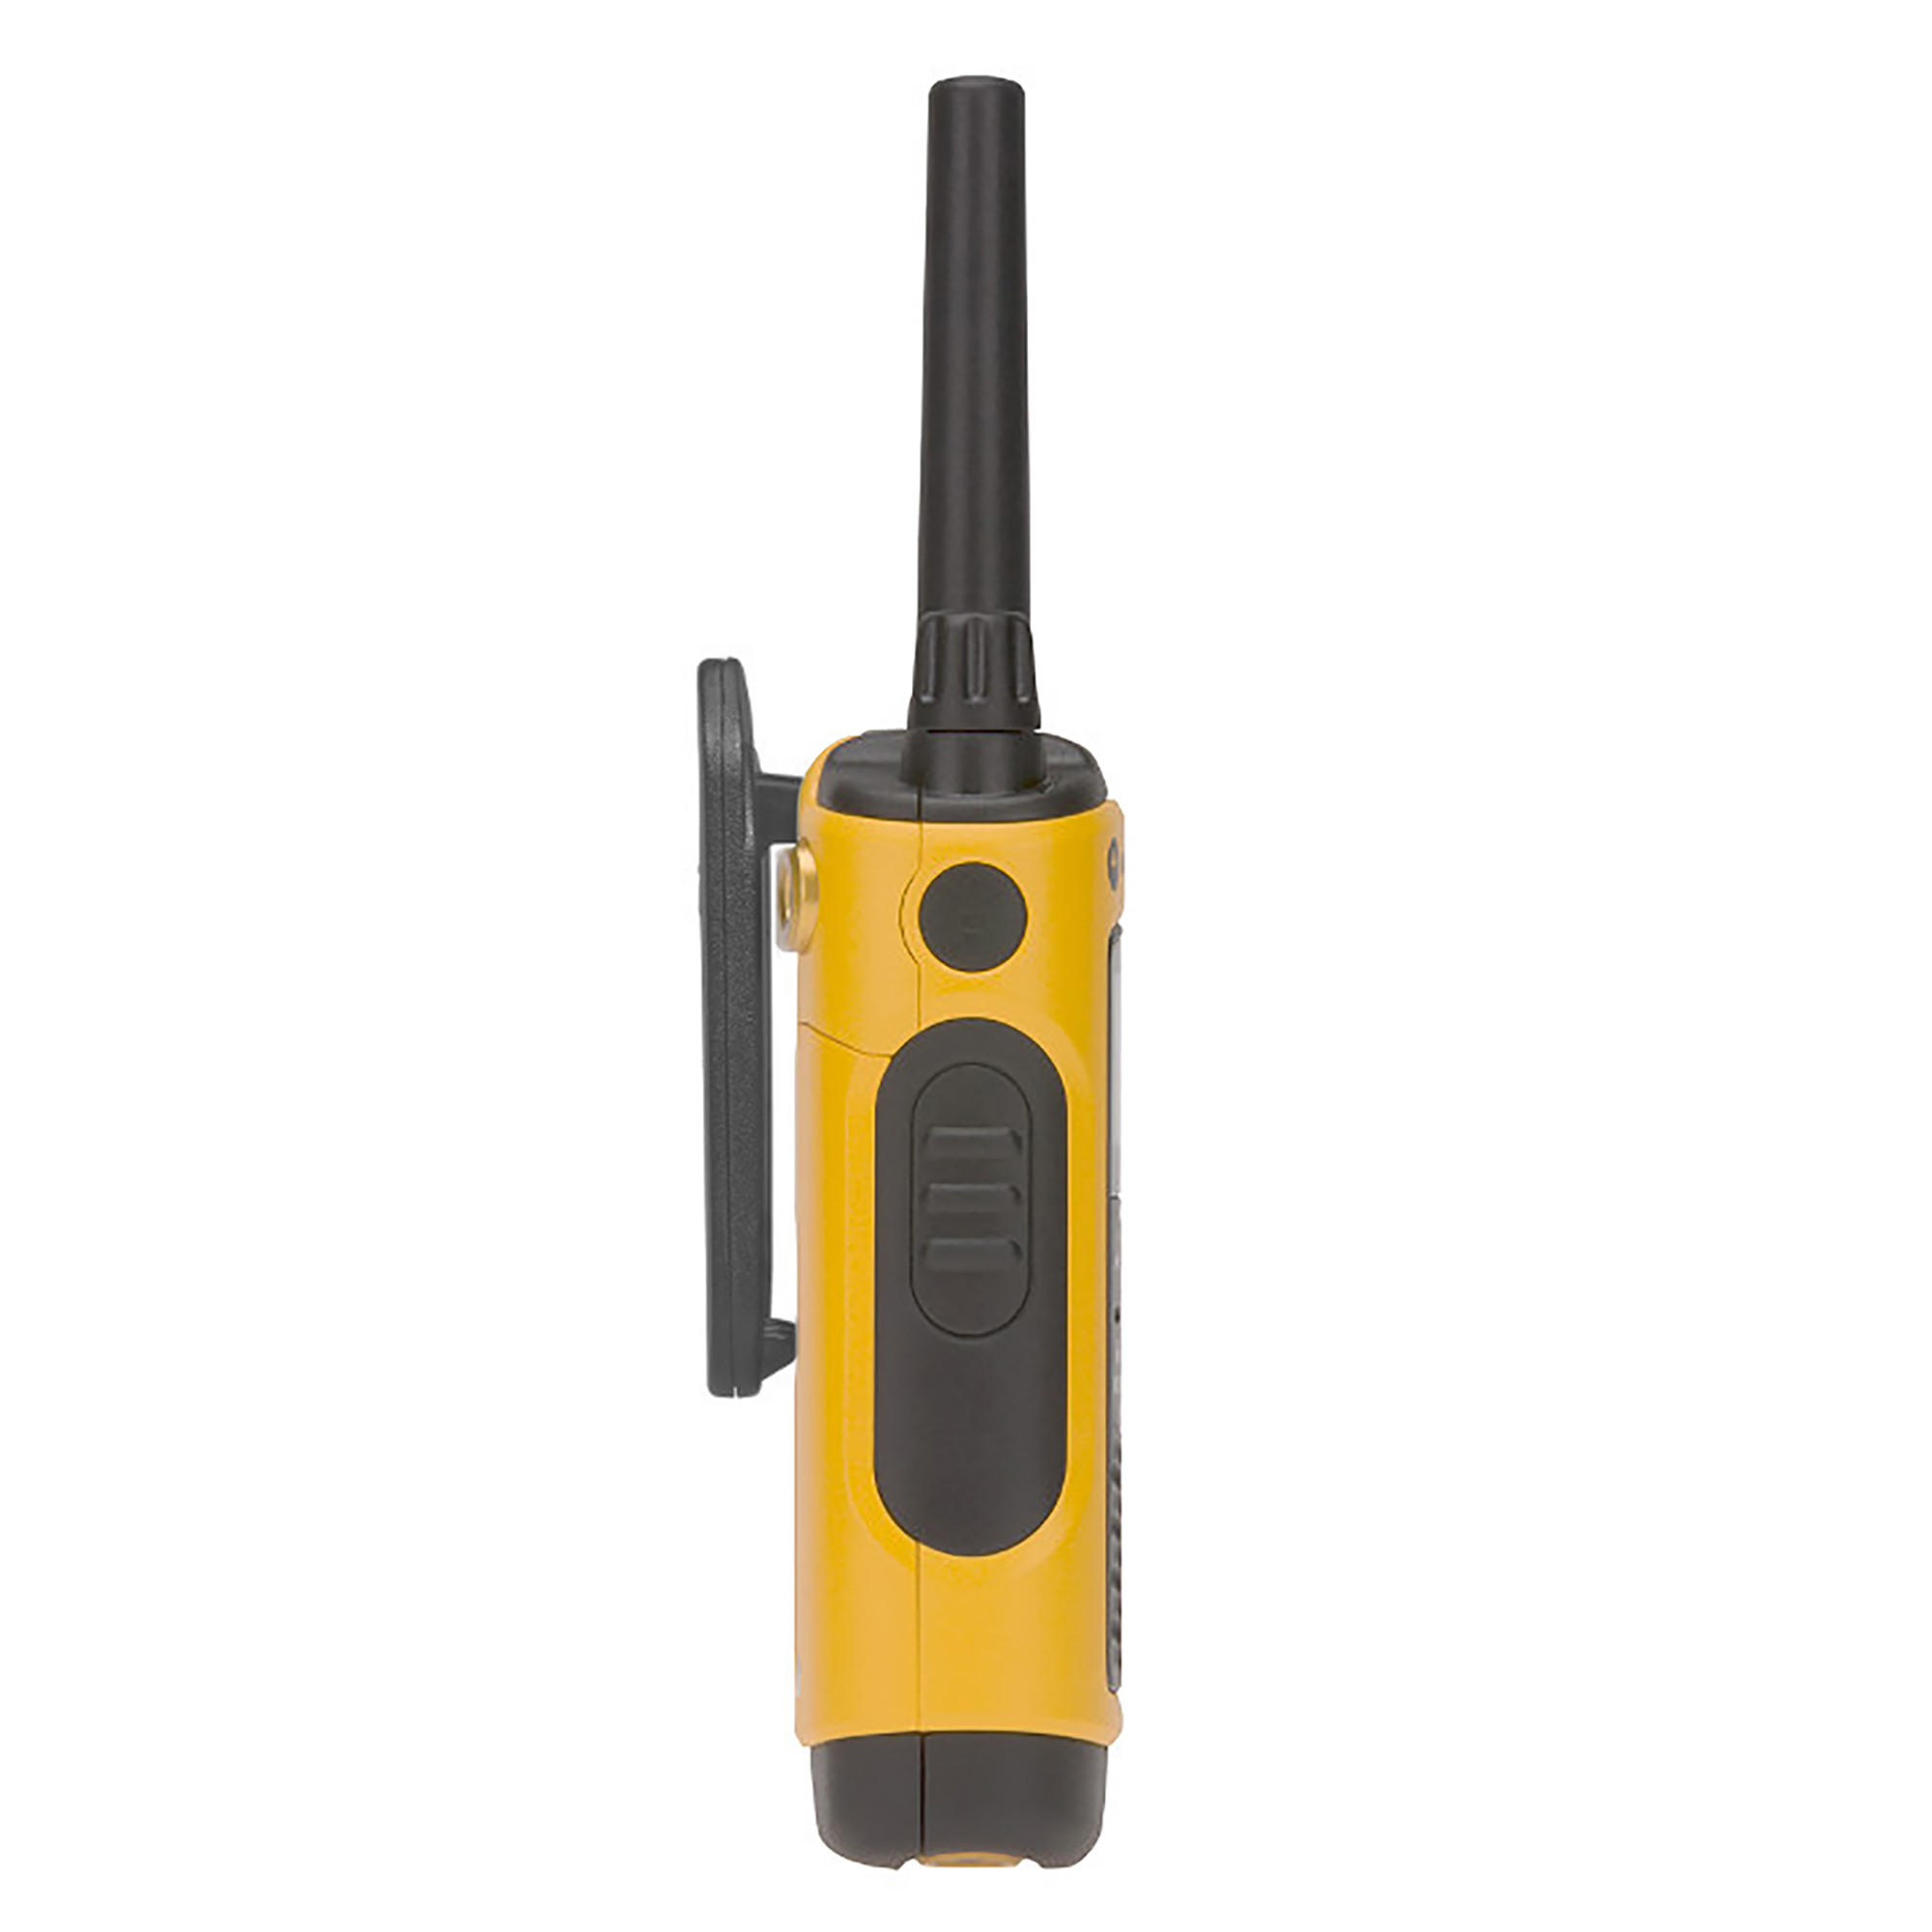 Motorola Talkabout T402 Two-Way Radios, 2-Pack, Yellow/Black